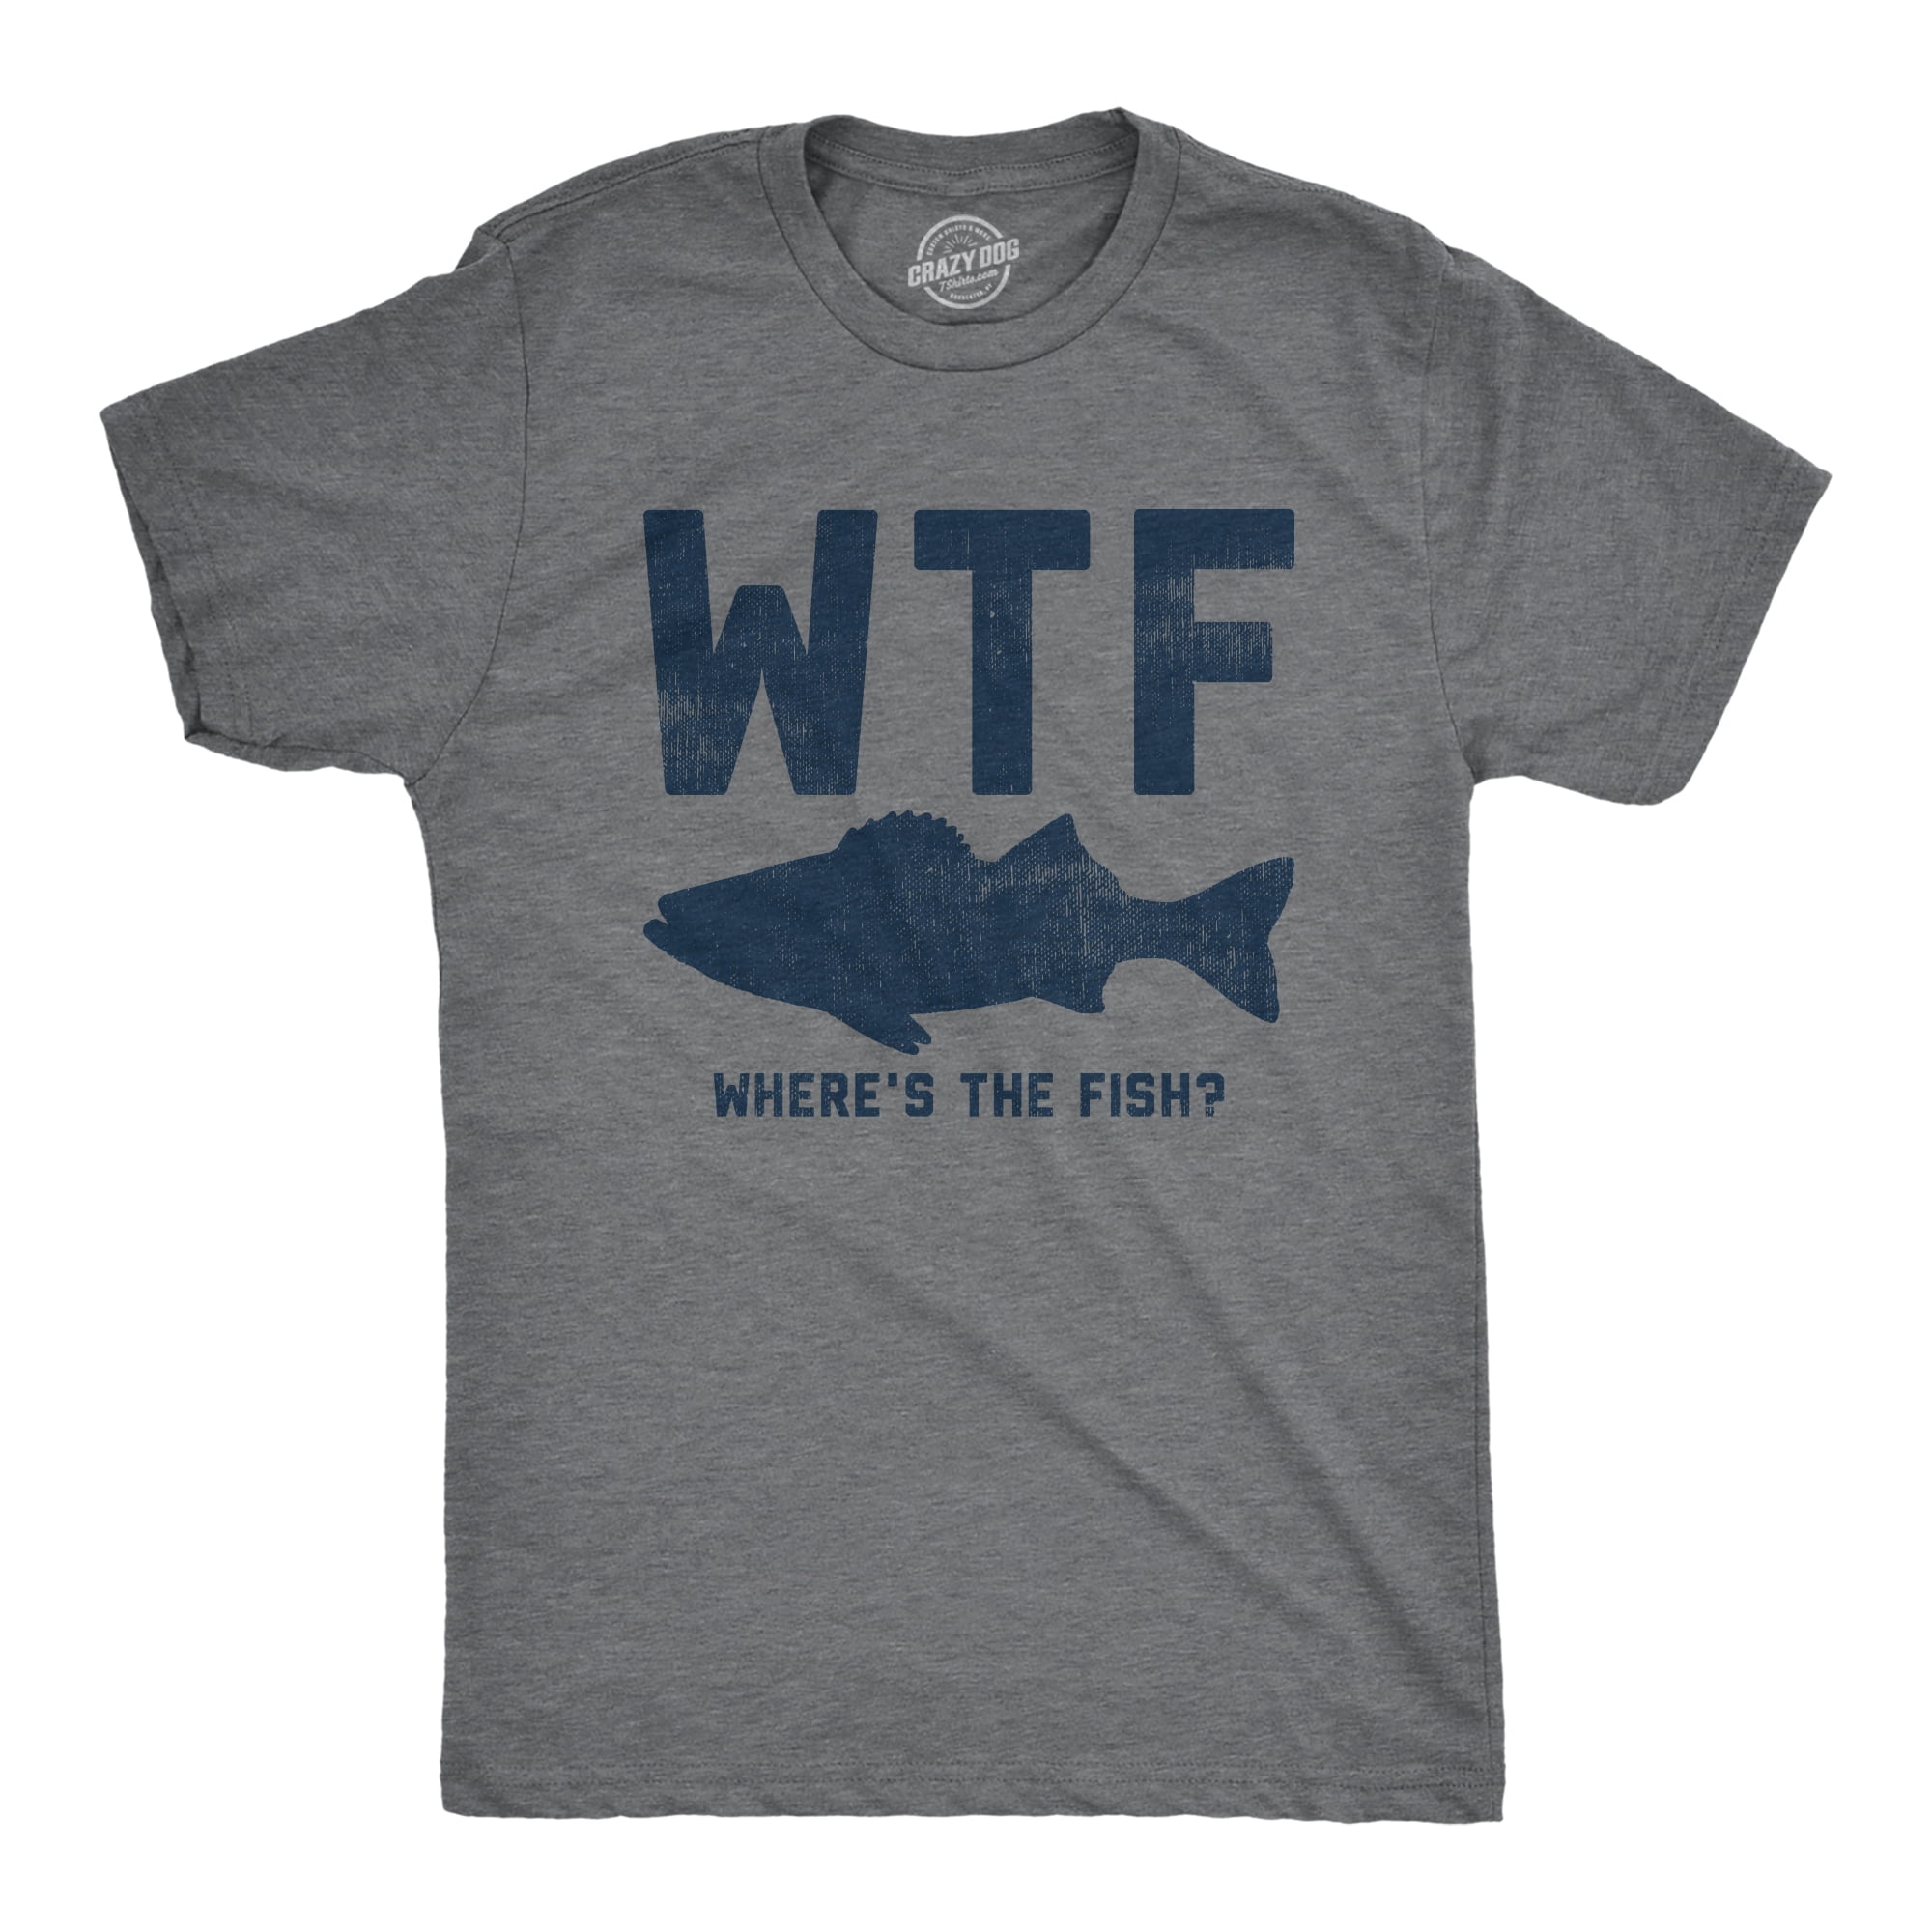 Fishing Gear for Men Fisherman Accessories Angler Fisher T-Shirt